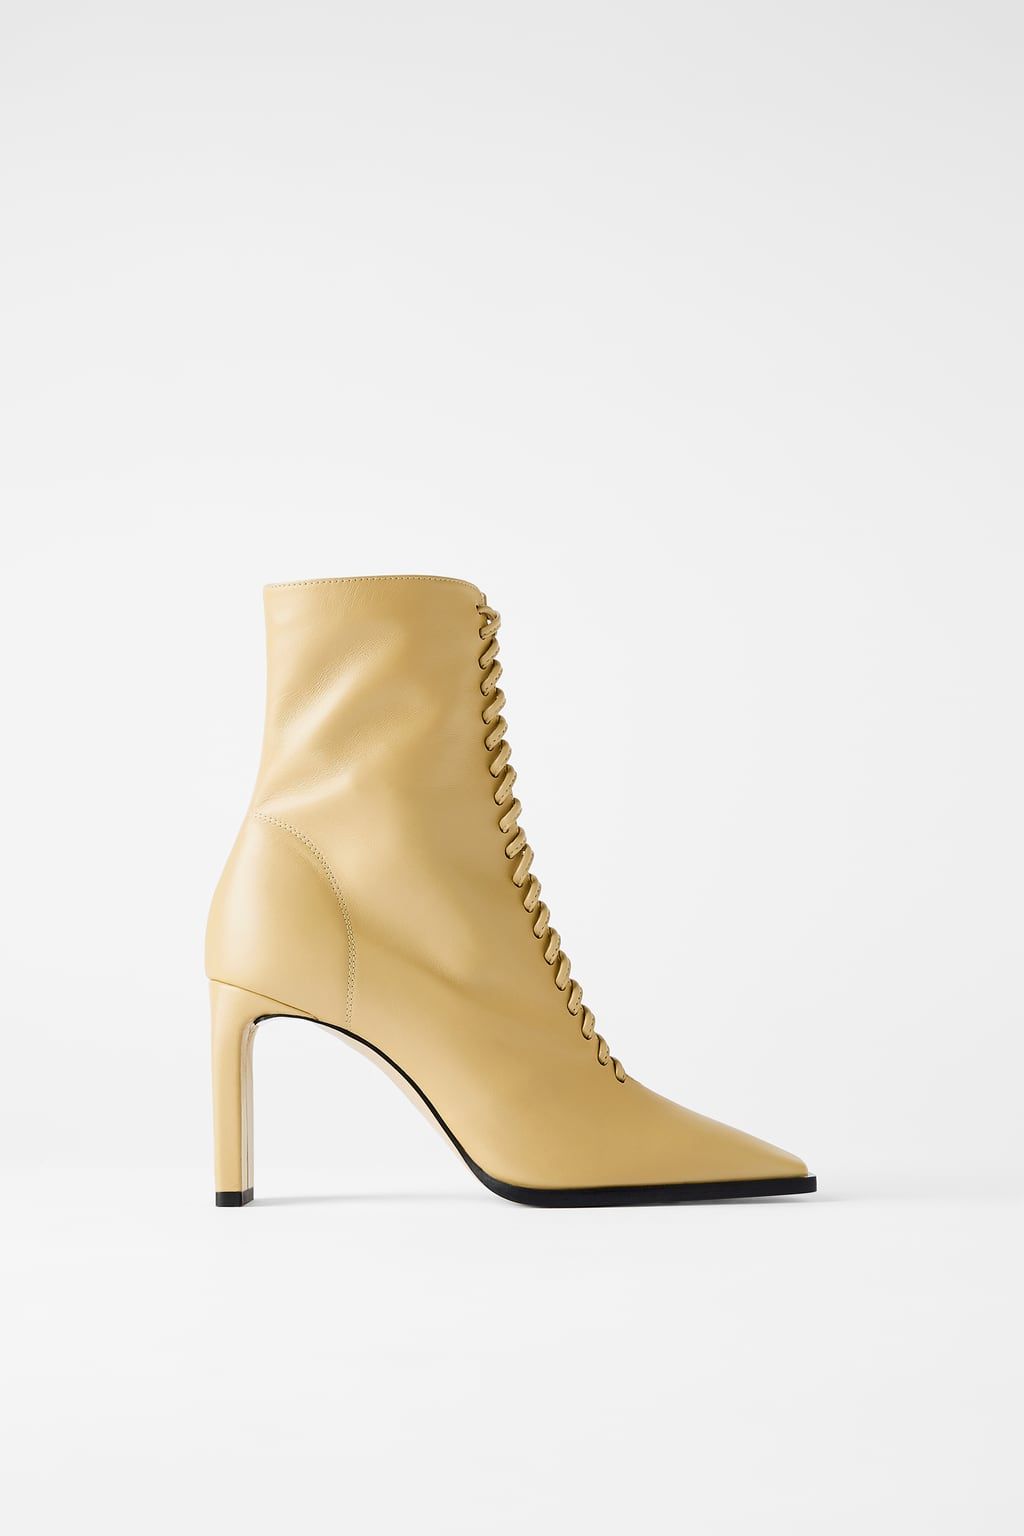 Zara boots: 9 best boots at Zara 